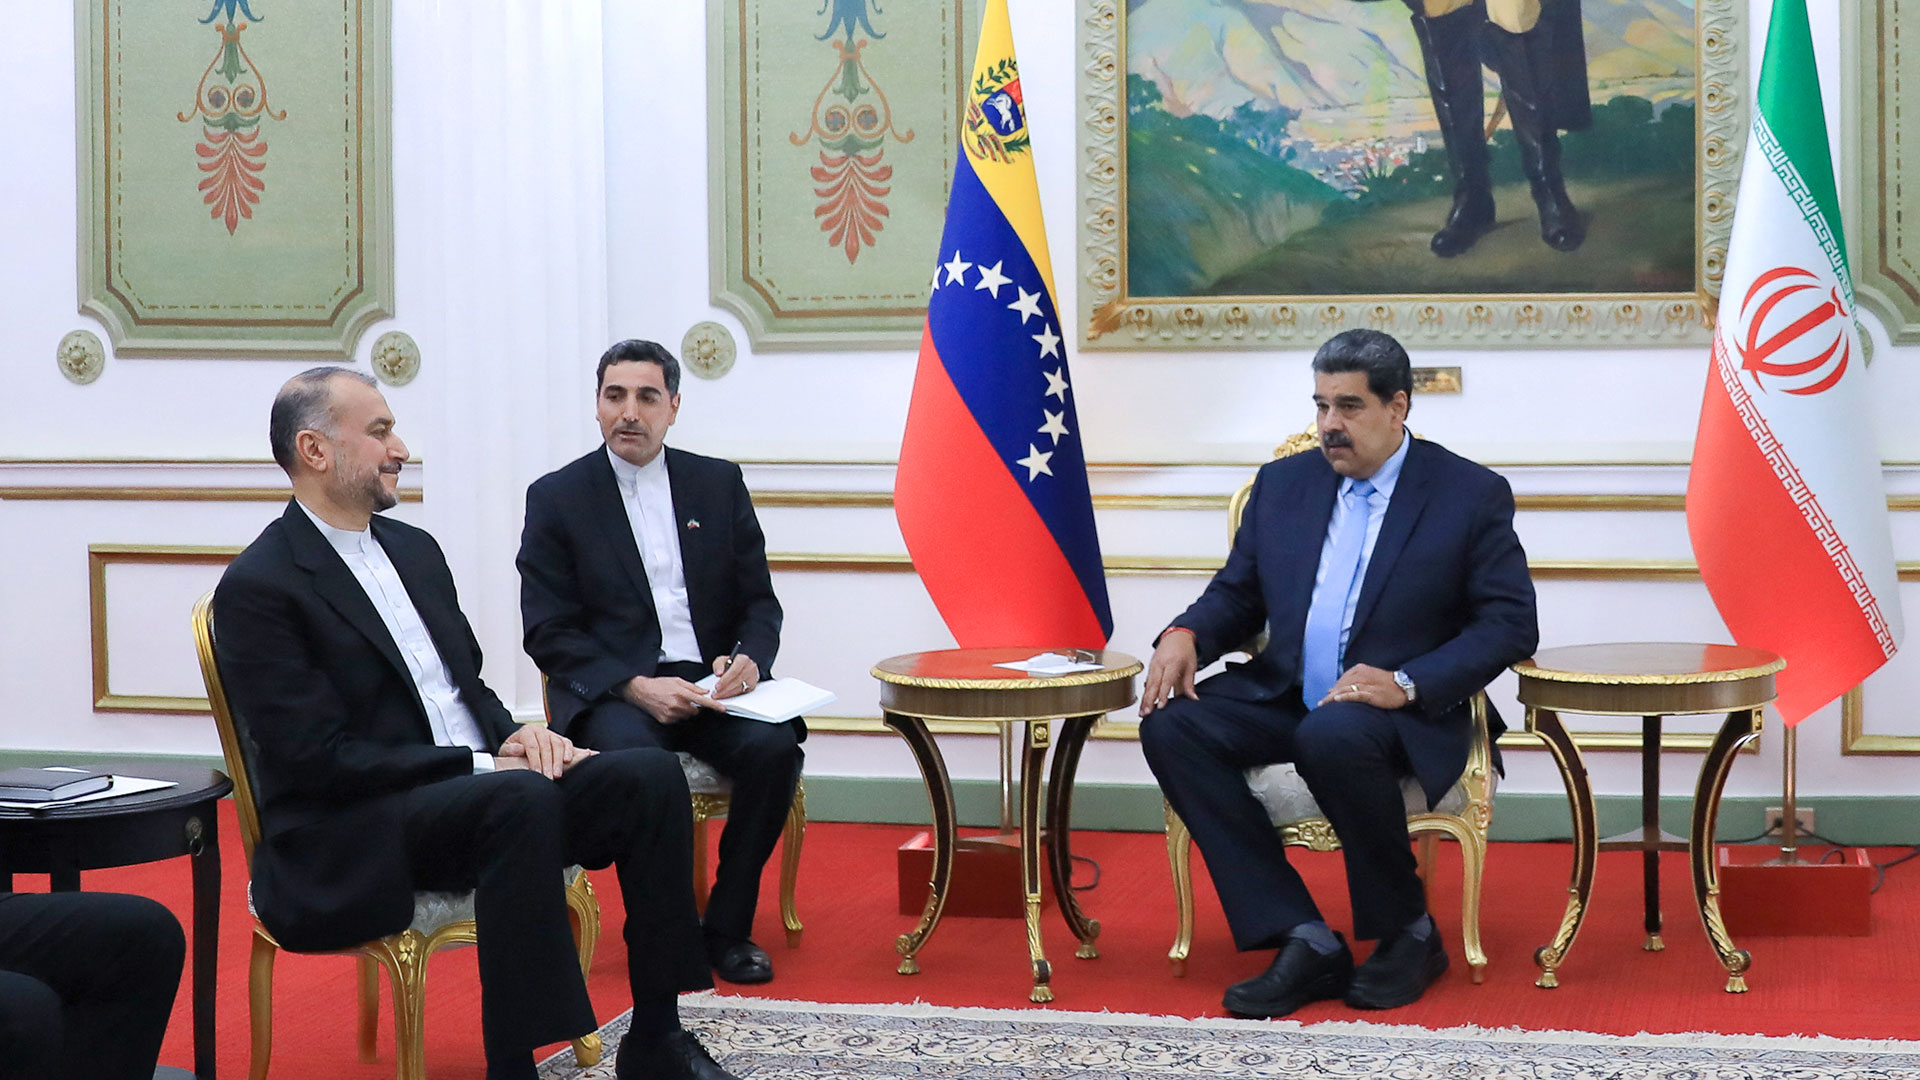 El dictador de Venezuela recibe en Miraflores al canciller del régimen de Irán 